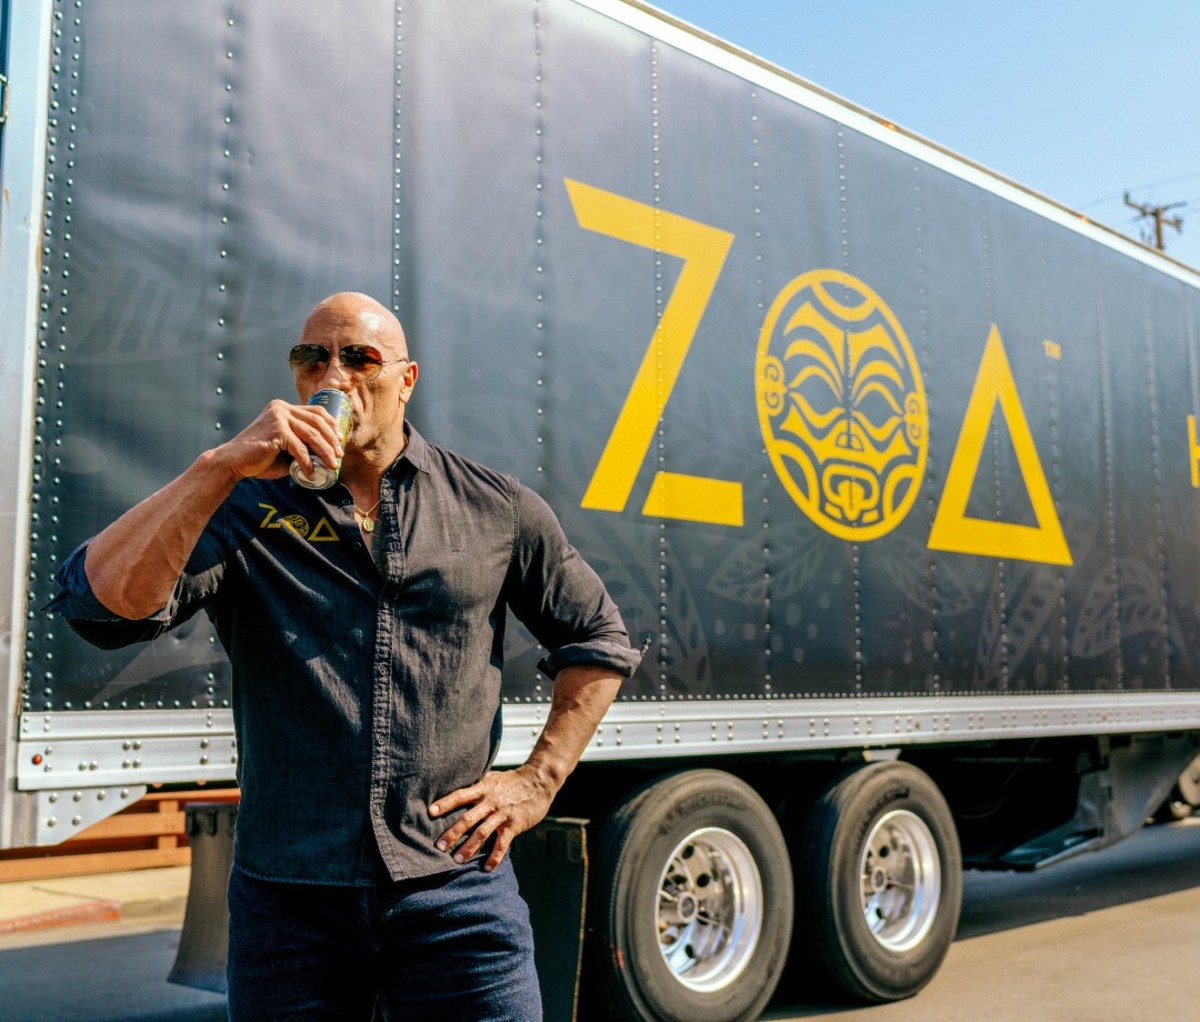 Dwayne Johnson drinks Zoa energy drink in front of a branded truck